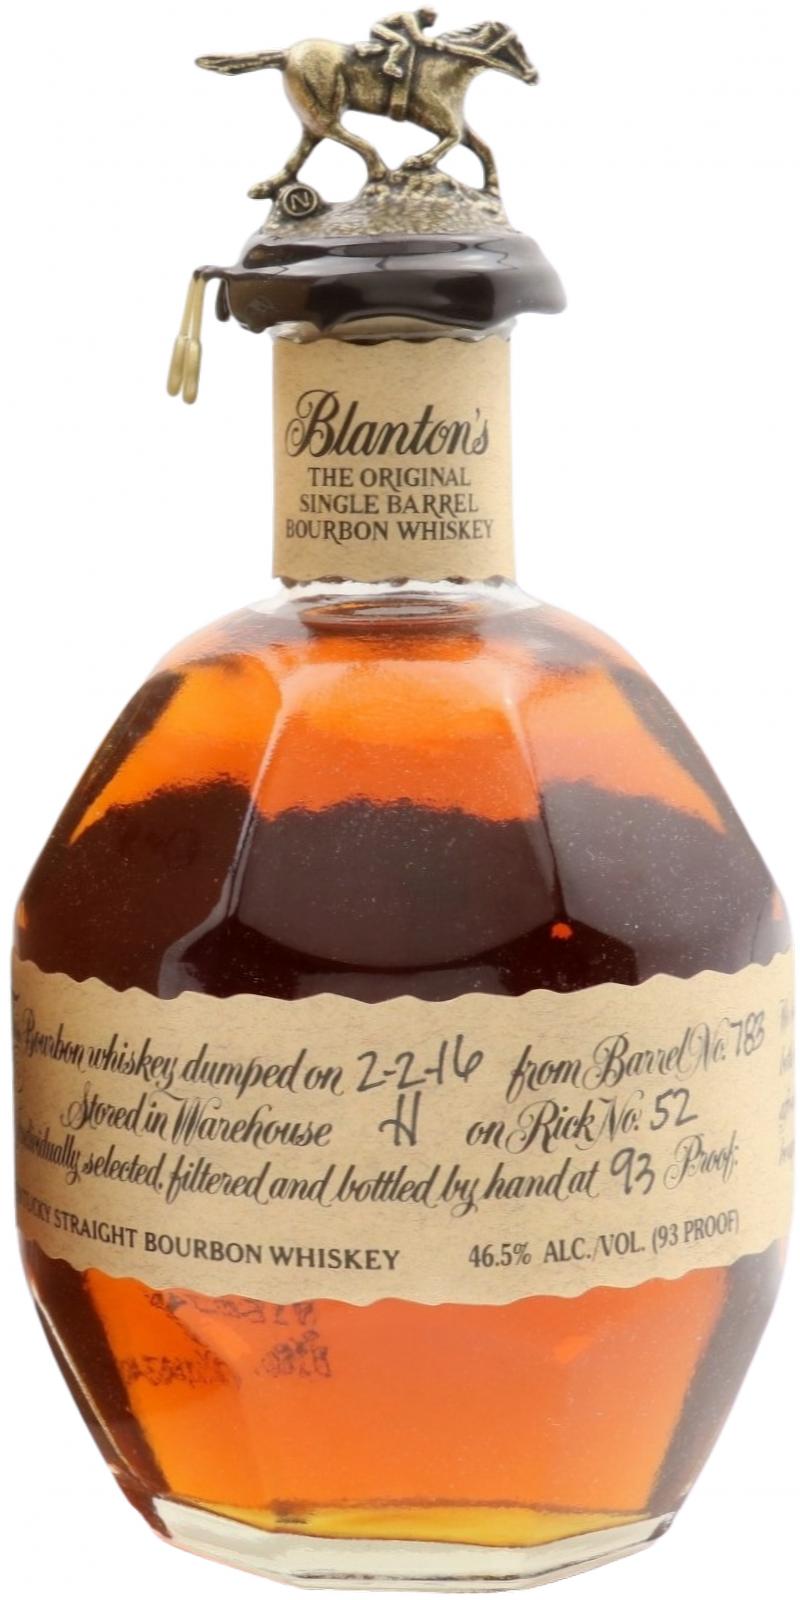 Blanton's The Original Single Barrel Bourbon Whisky #4 Charred American White Oak Barrel 783 46.5% 700ml